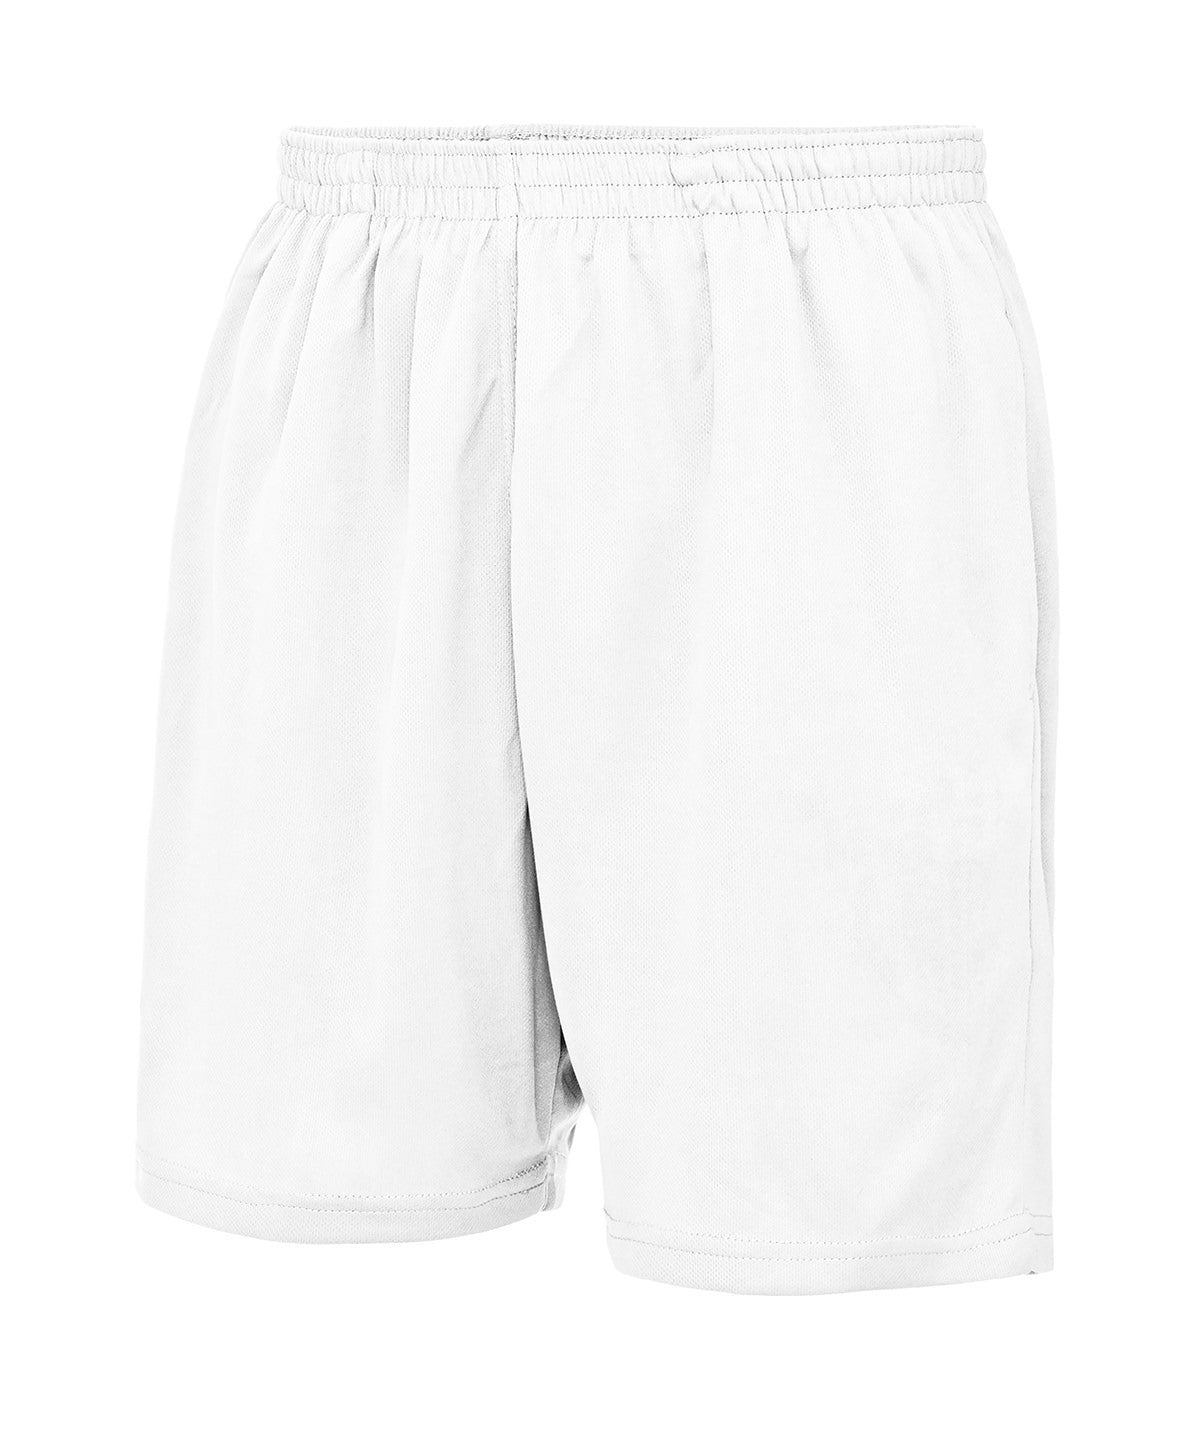 Personalised Shorts - White AWDis Just Cool Cool shorts